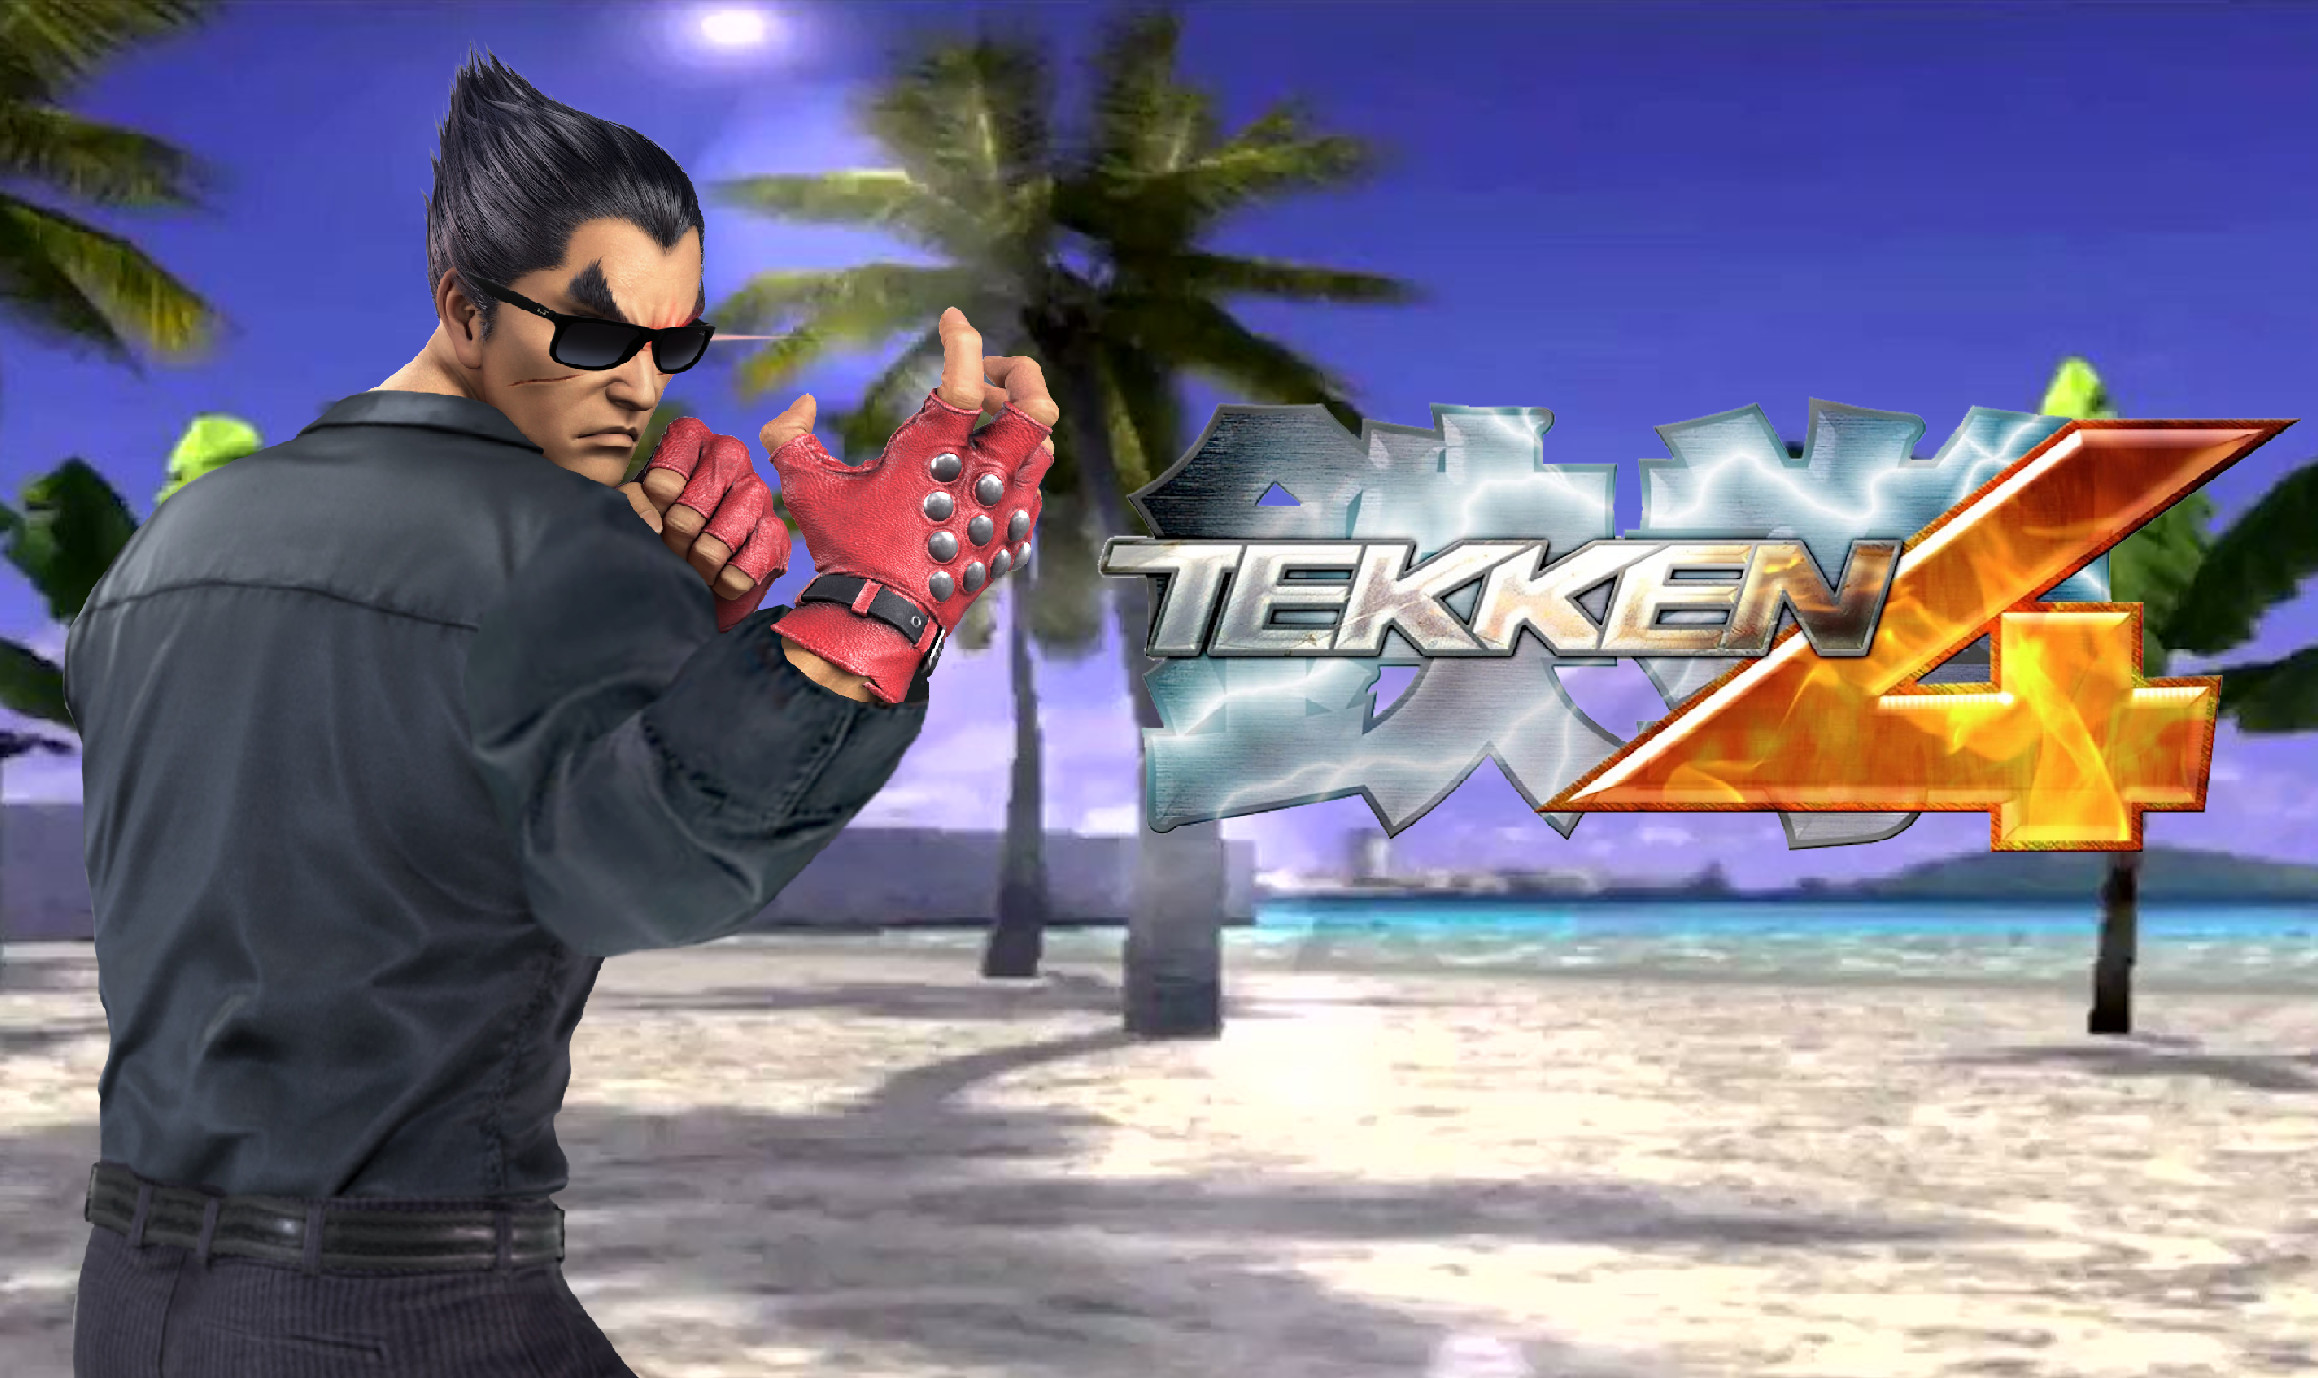 Tekken 4 Kazuya (UI ONLY) [Super Smash Bros. Ultimate] [Mods]